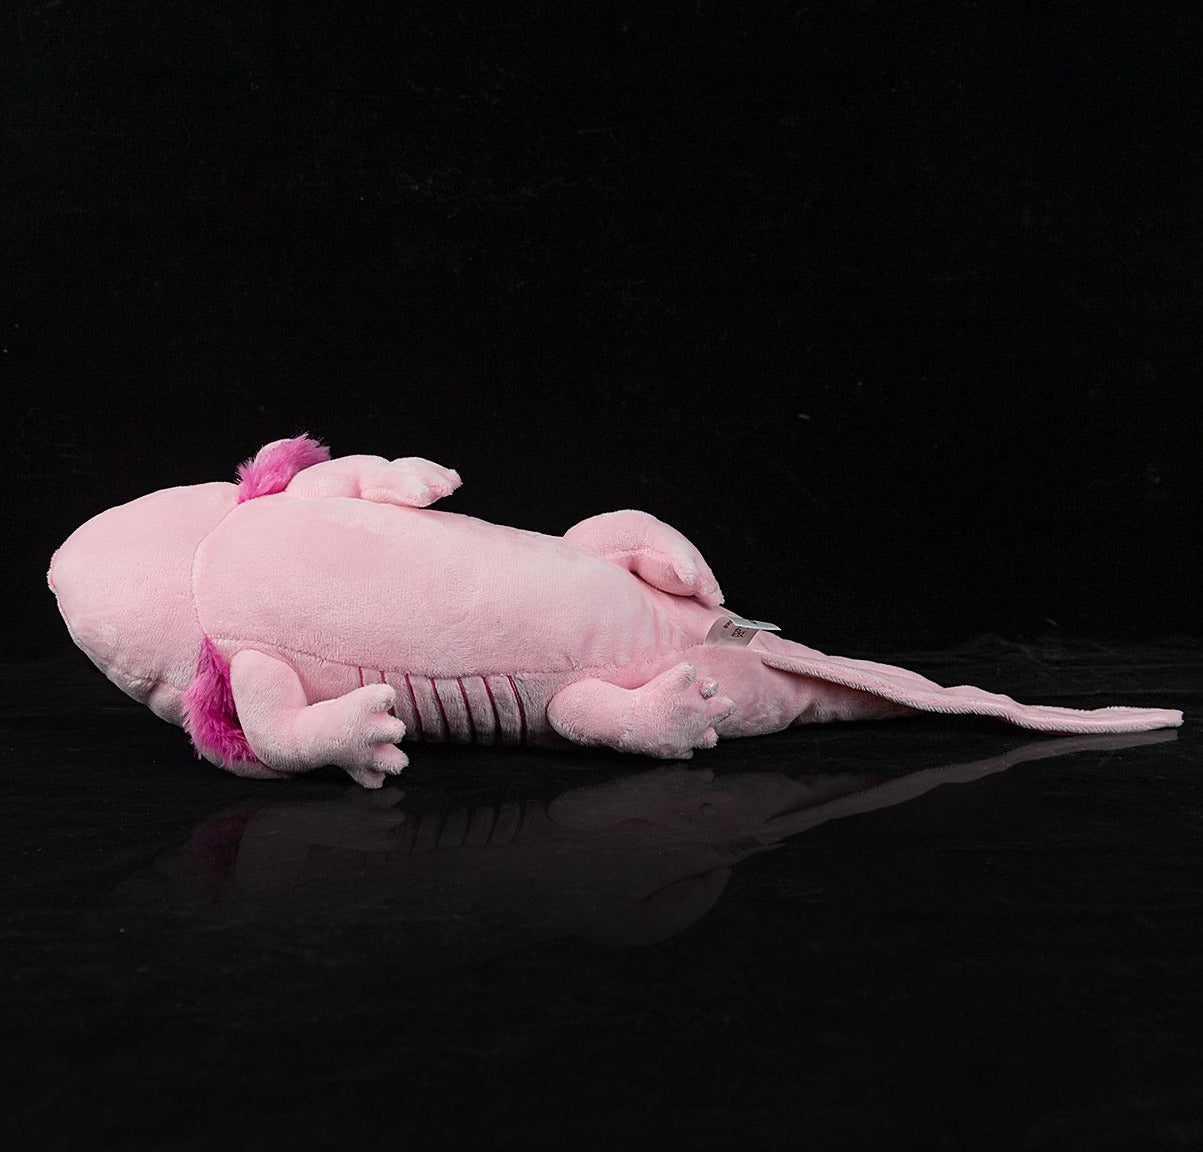 Rosa Axolotl weiches Plüschtier